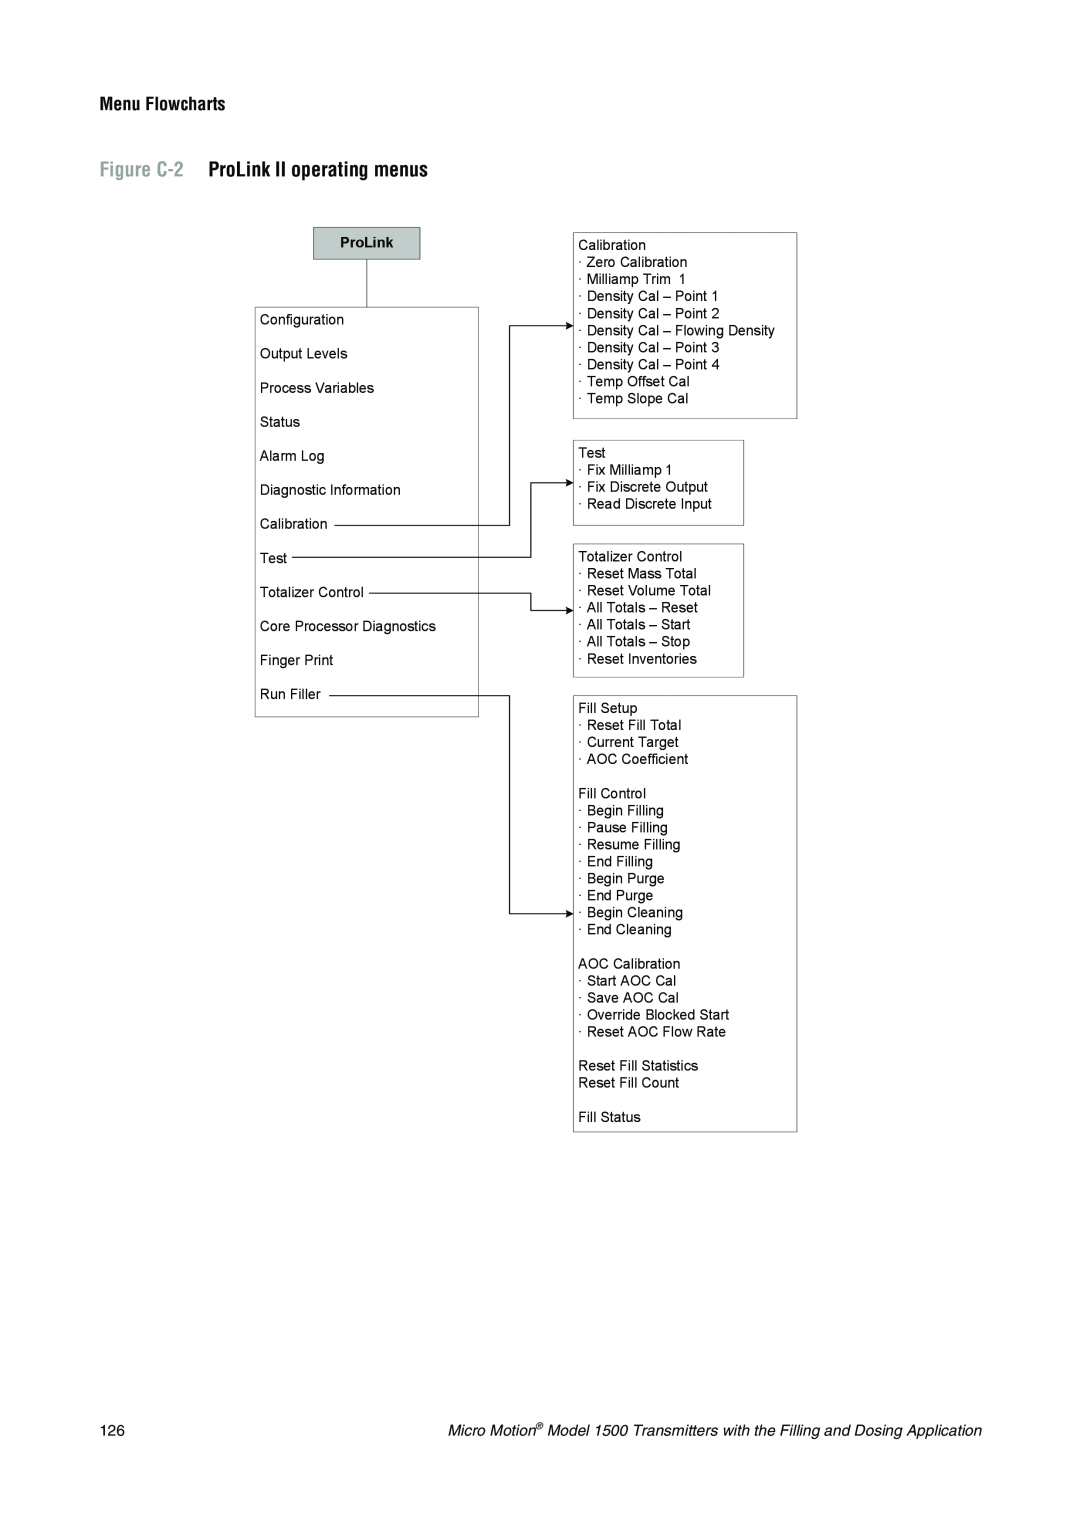 Emerson Process Management 1500 manual Figure C-2 ProLink II operating menus, Menu Flowcharts 